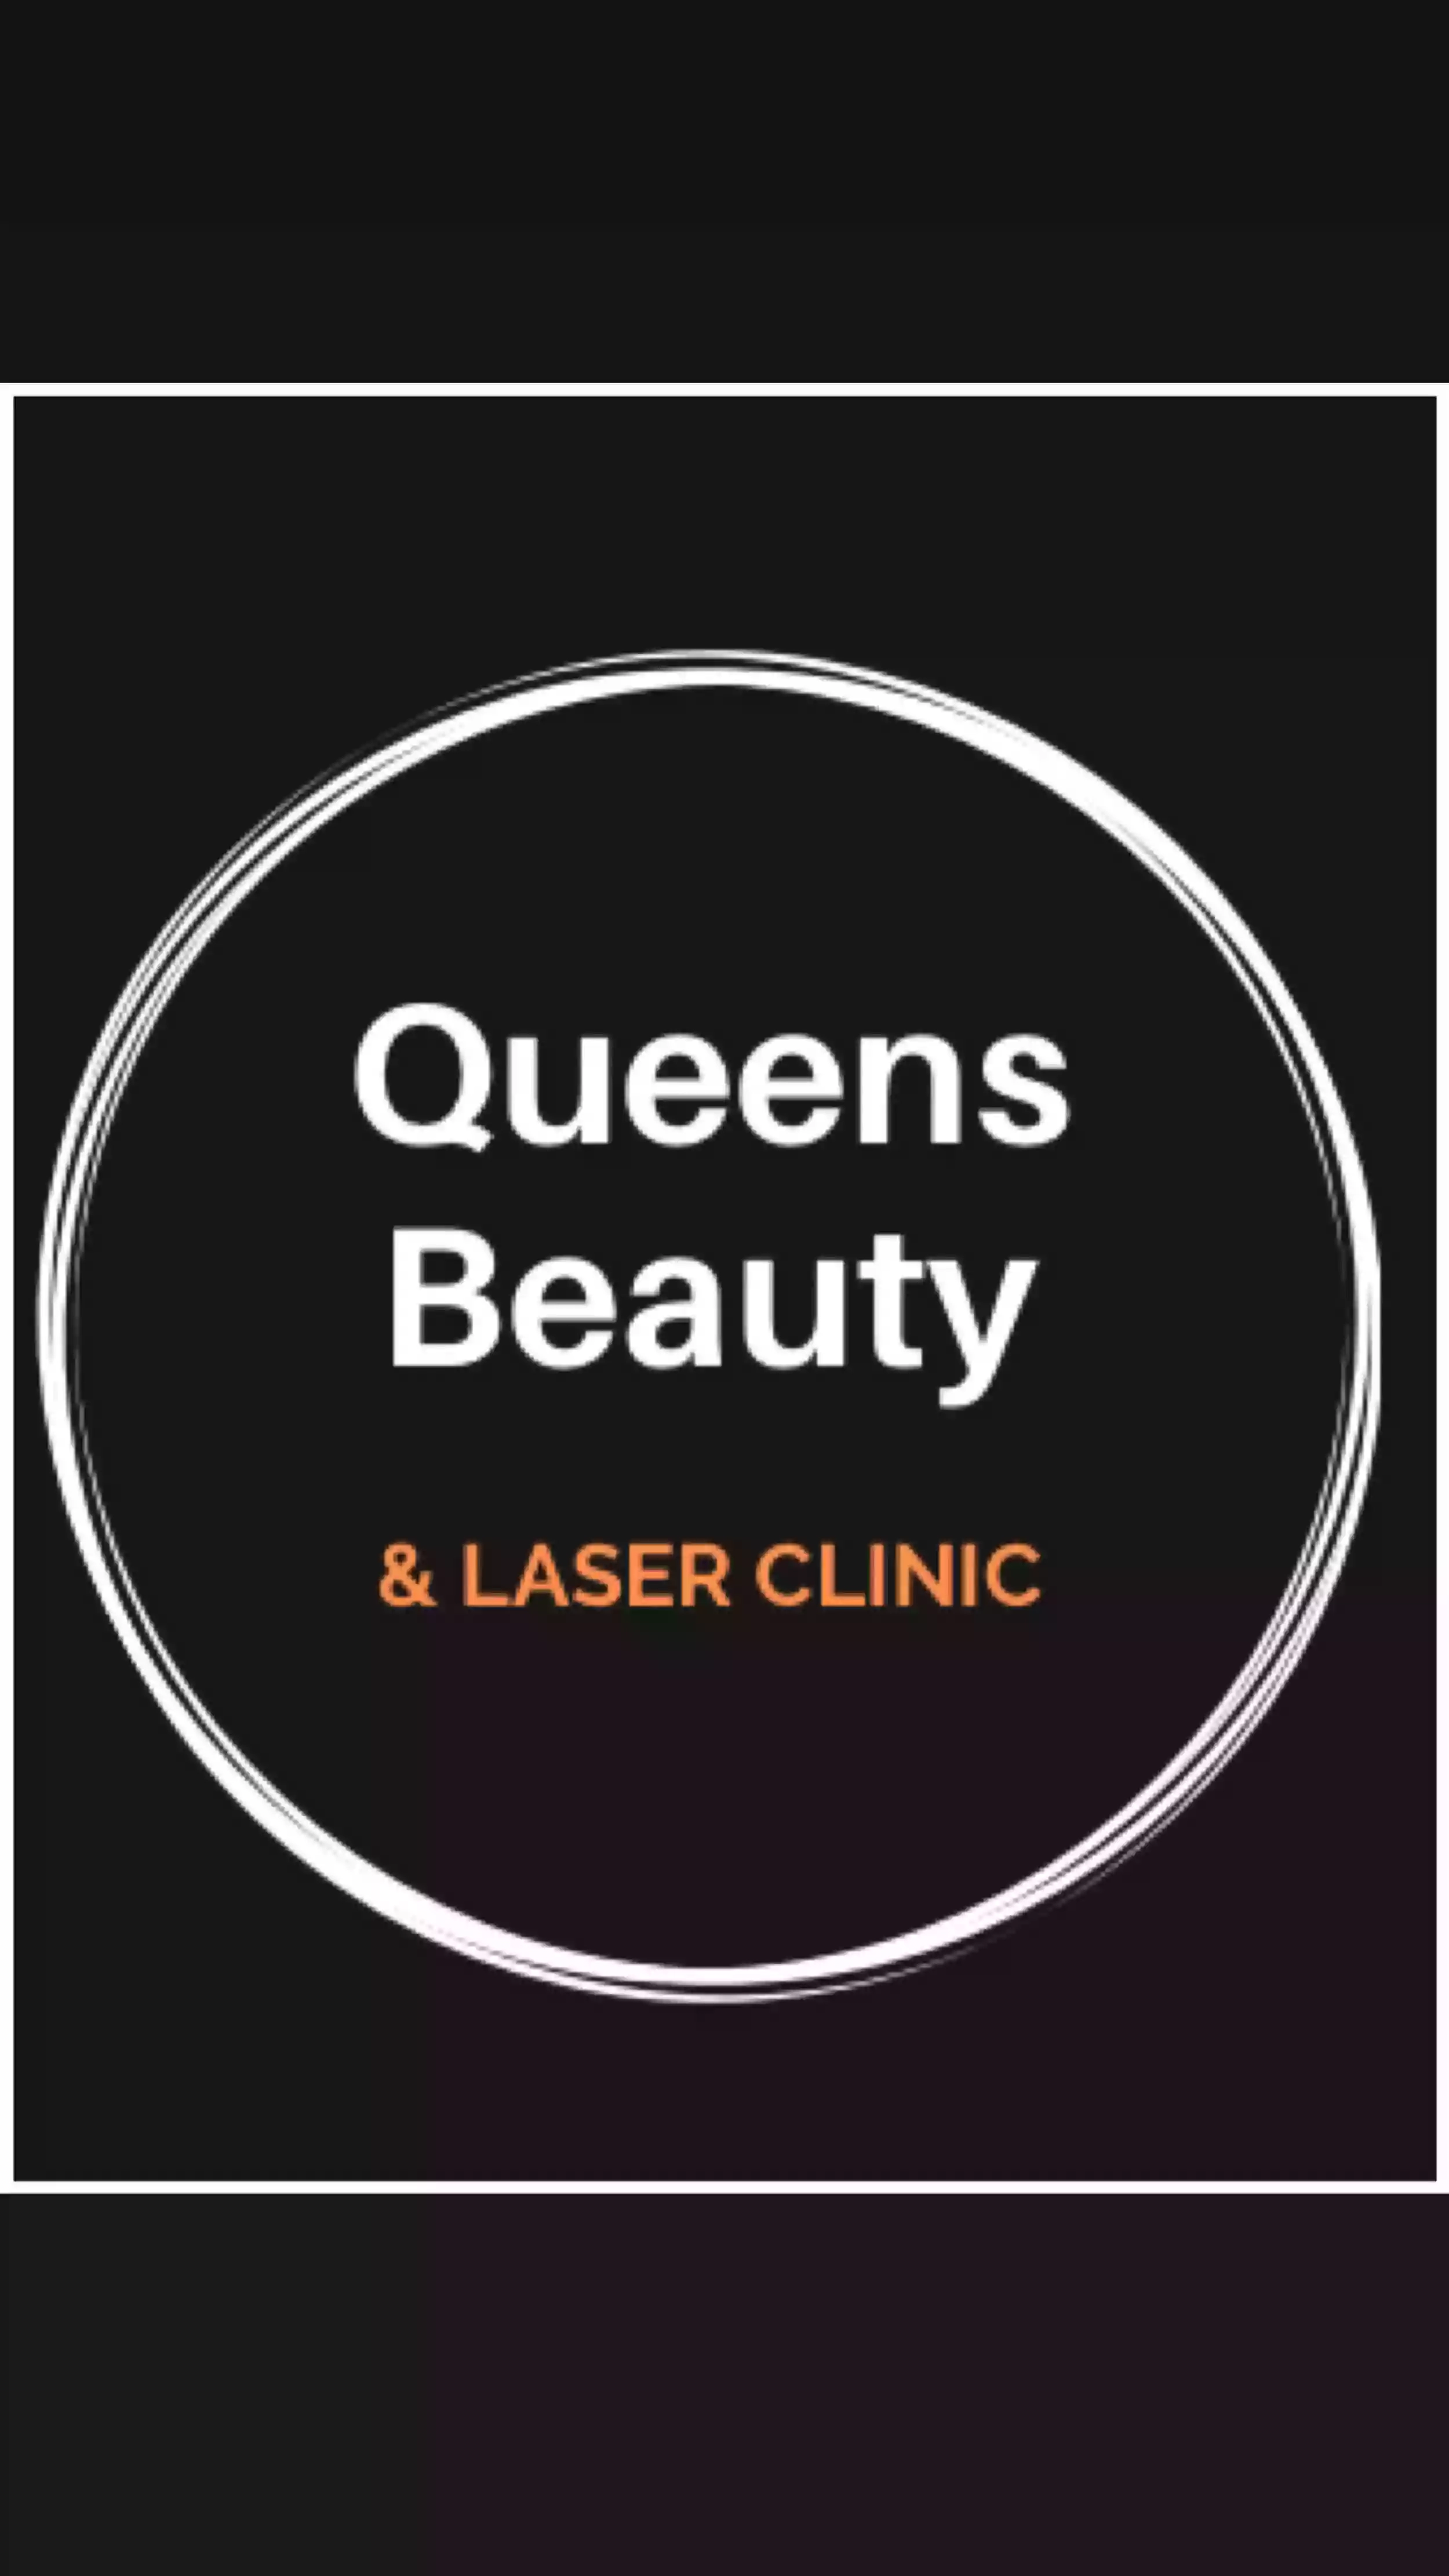 Queens Beauty & Laser Clinic